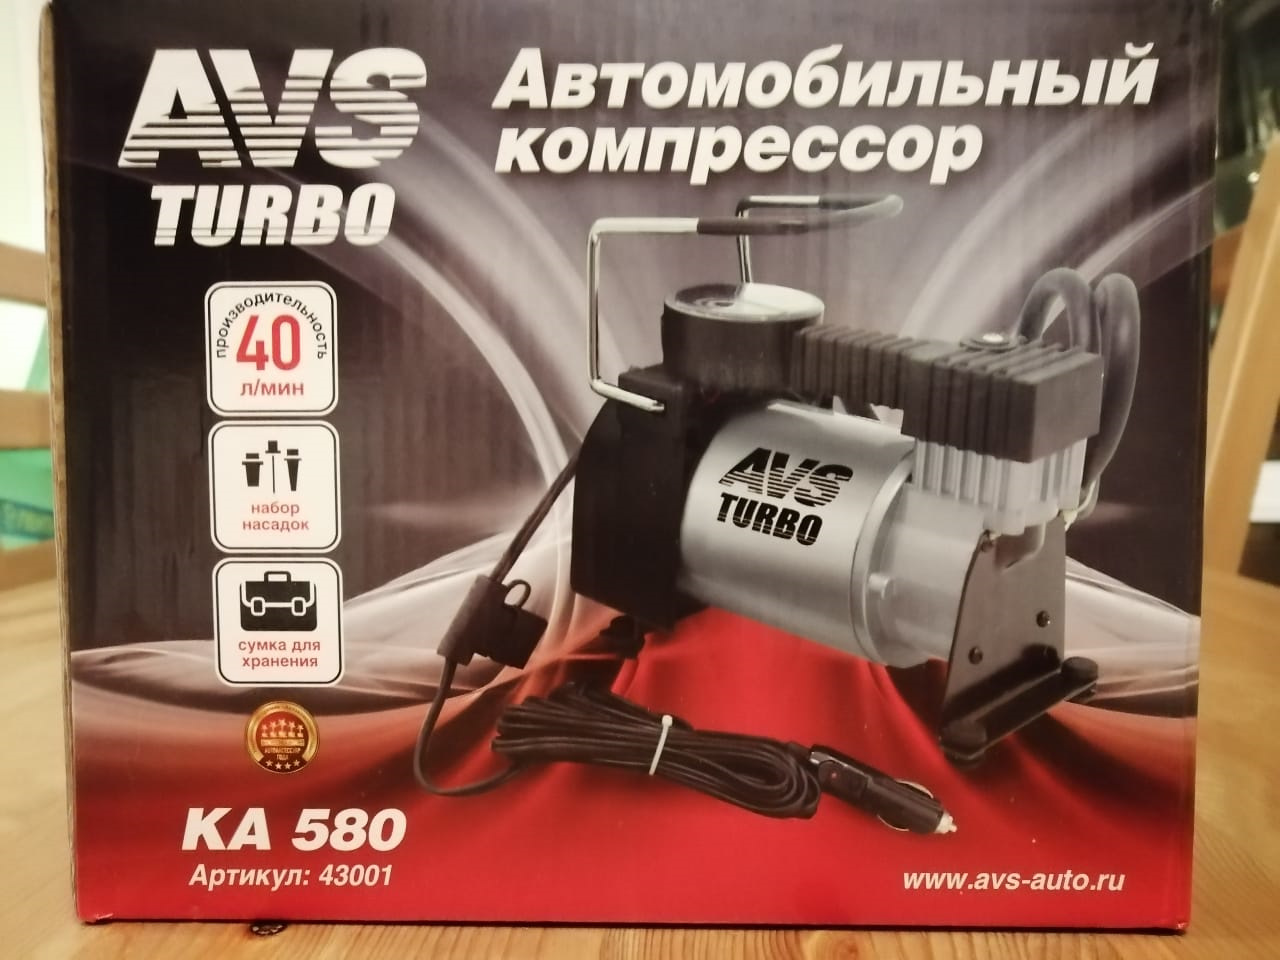 Компрессоры avs купить. Компрессор AVS Turbo ka580. Автомобильный компрессор AVS ka580. Компрессор AVS ка-580. Компрессор автомобильный AVS 40.